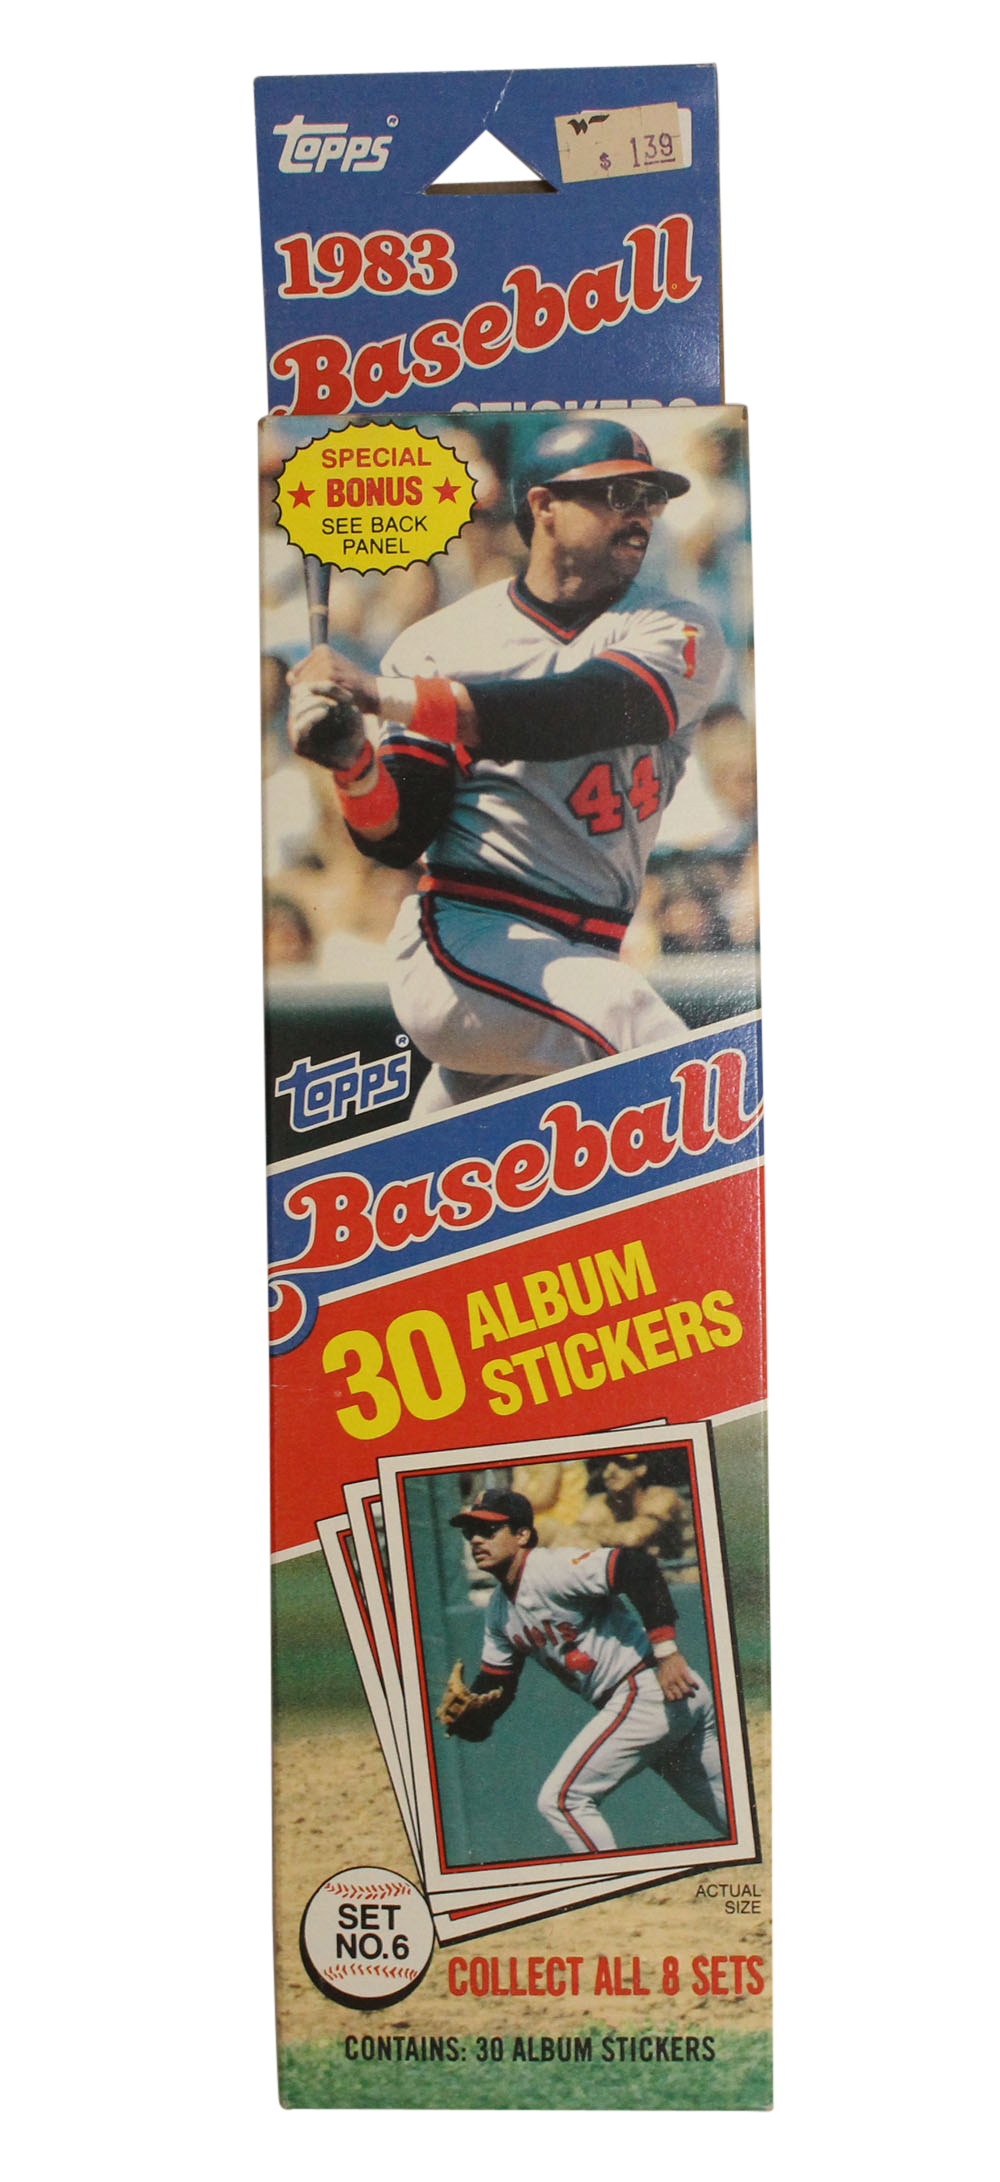 1983 MLB Album Stickers Set #6 30 Stickers